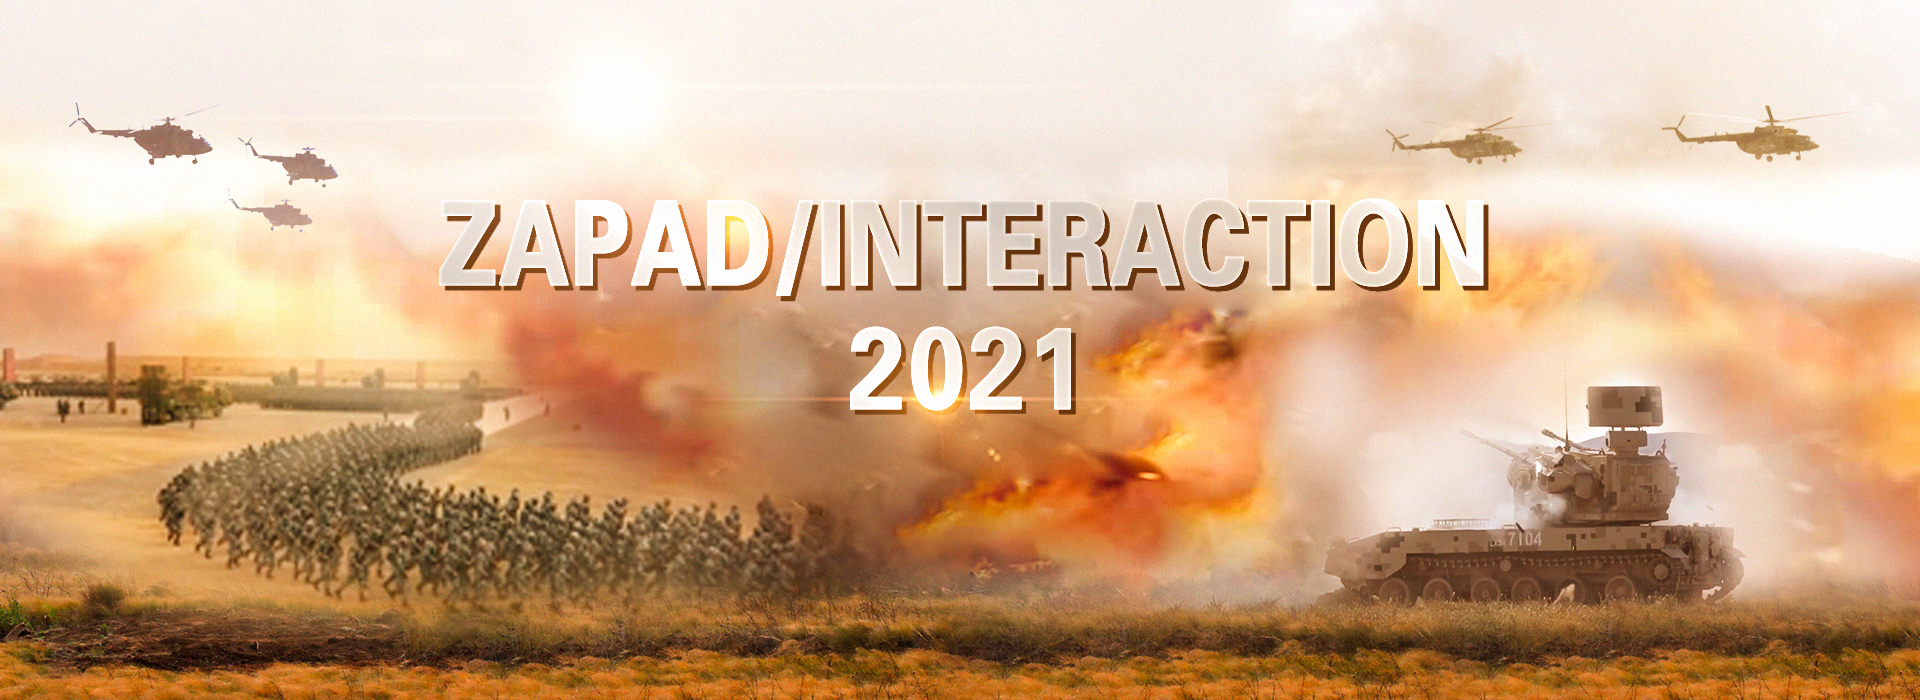 ZAPAD/INTERACTION-2021